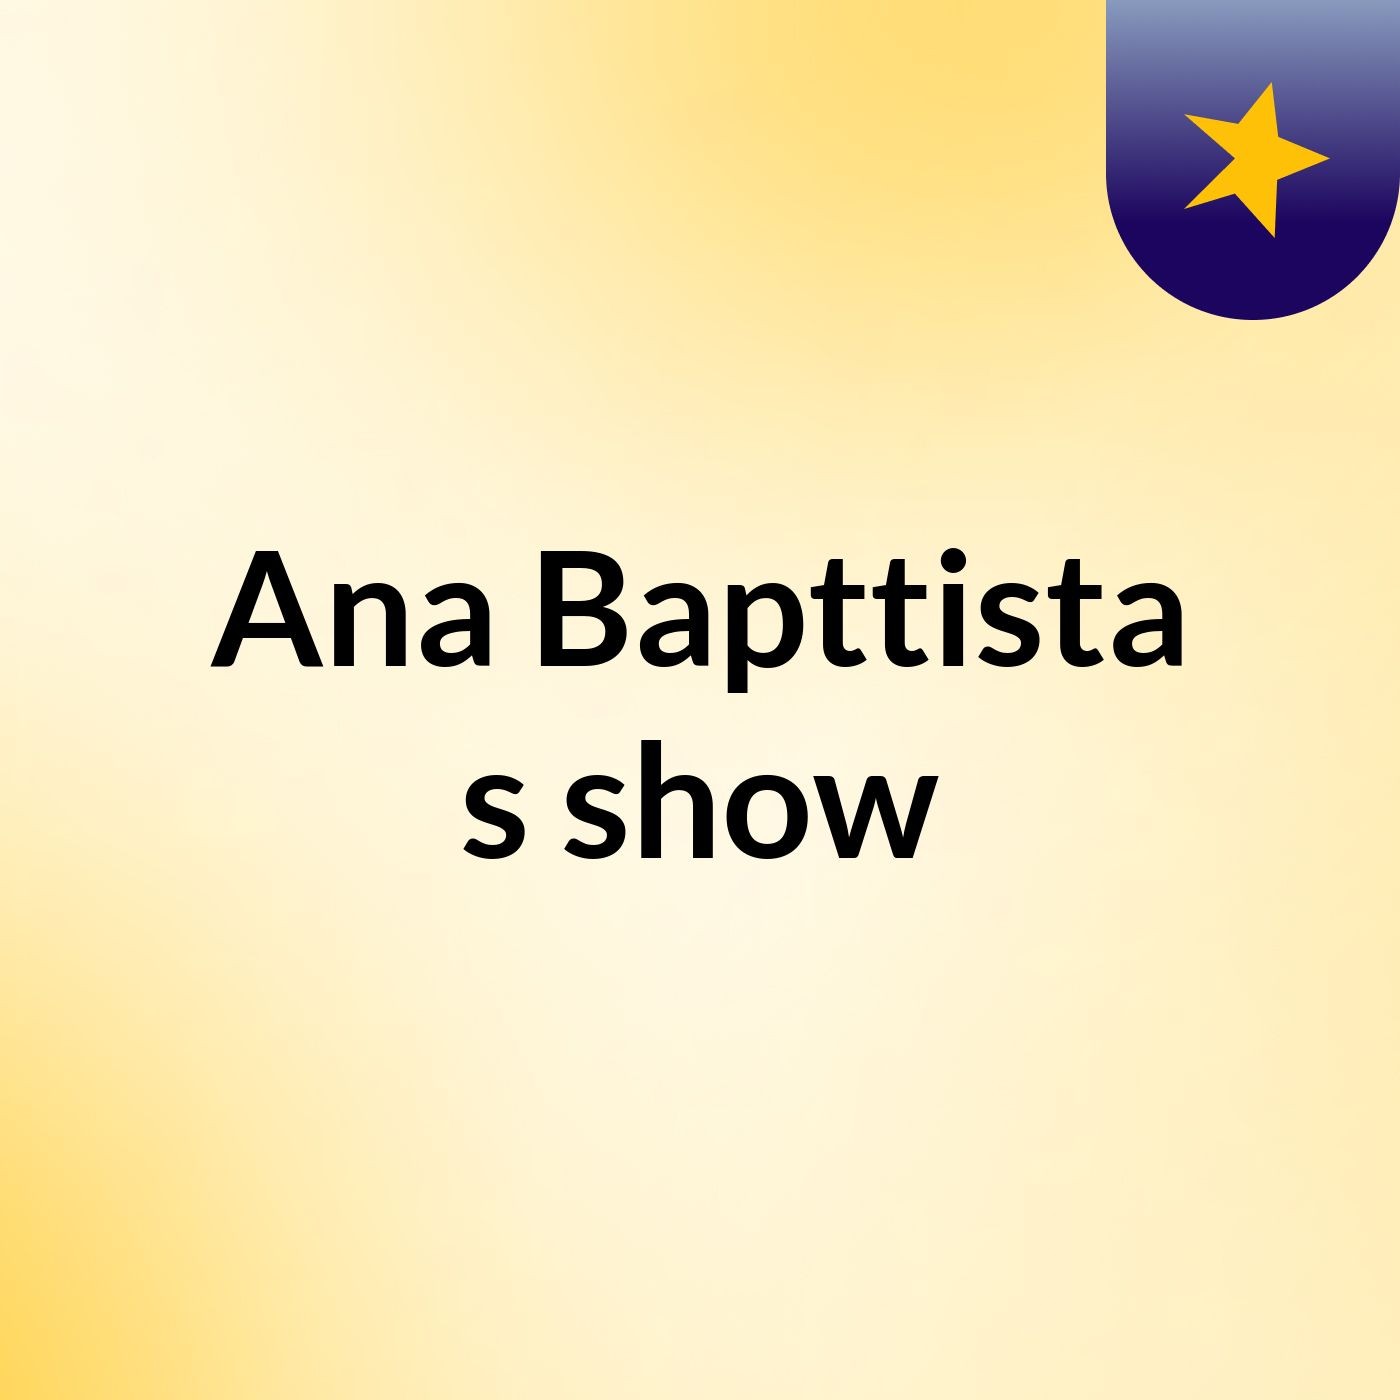 Ana Bapttista's show